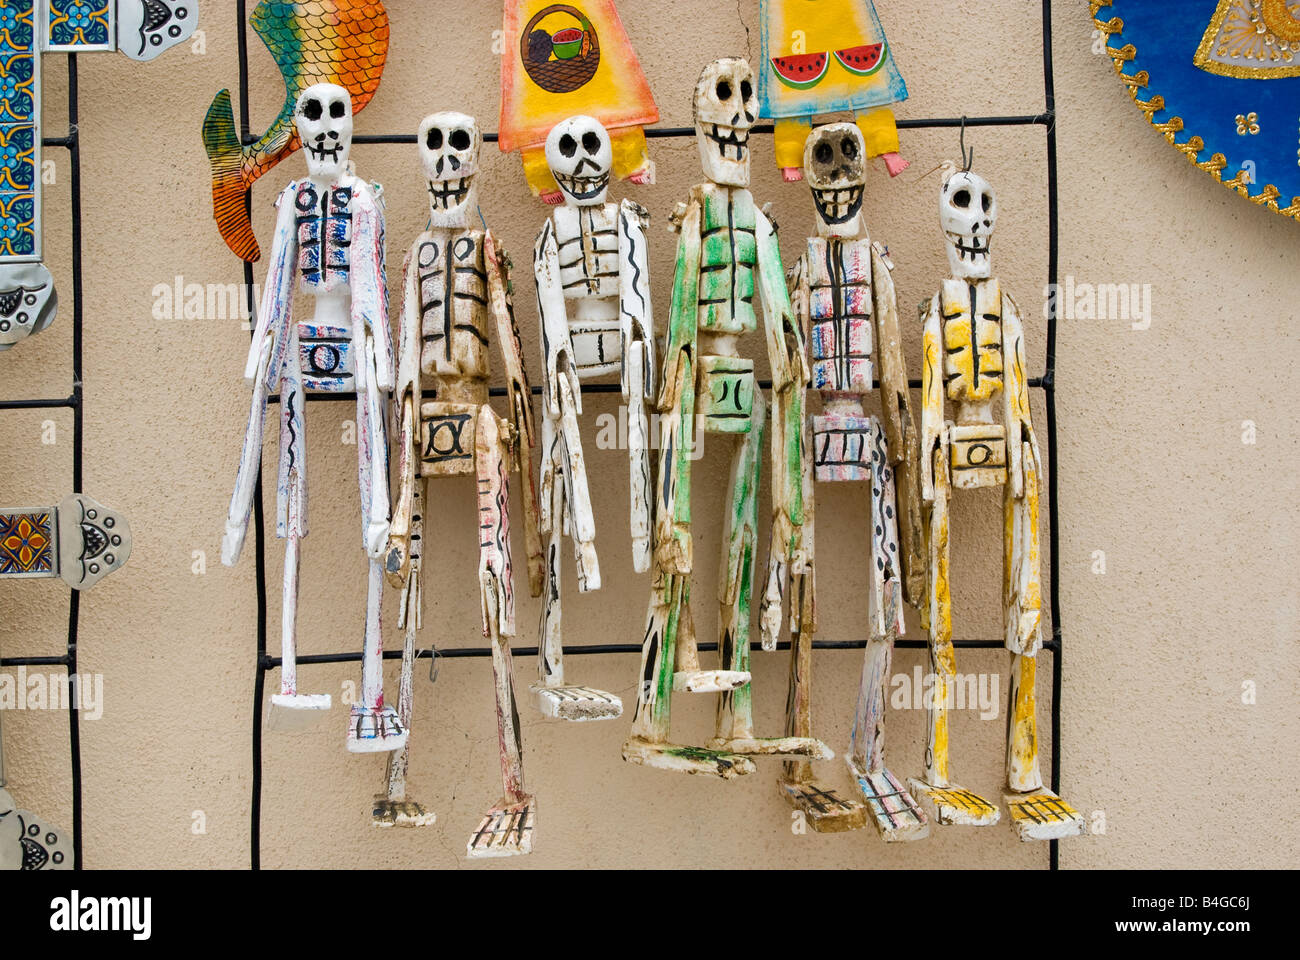 Toy skeletons at curio shop at Todos Santos Baja California Sur Mexico Stock Photo